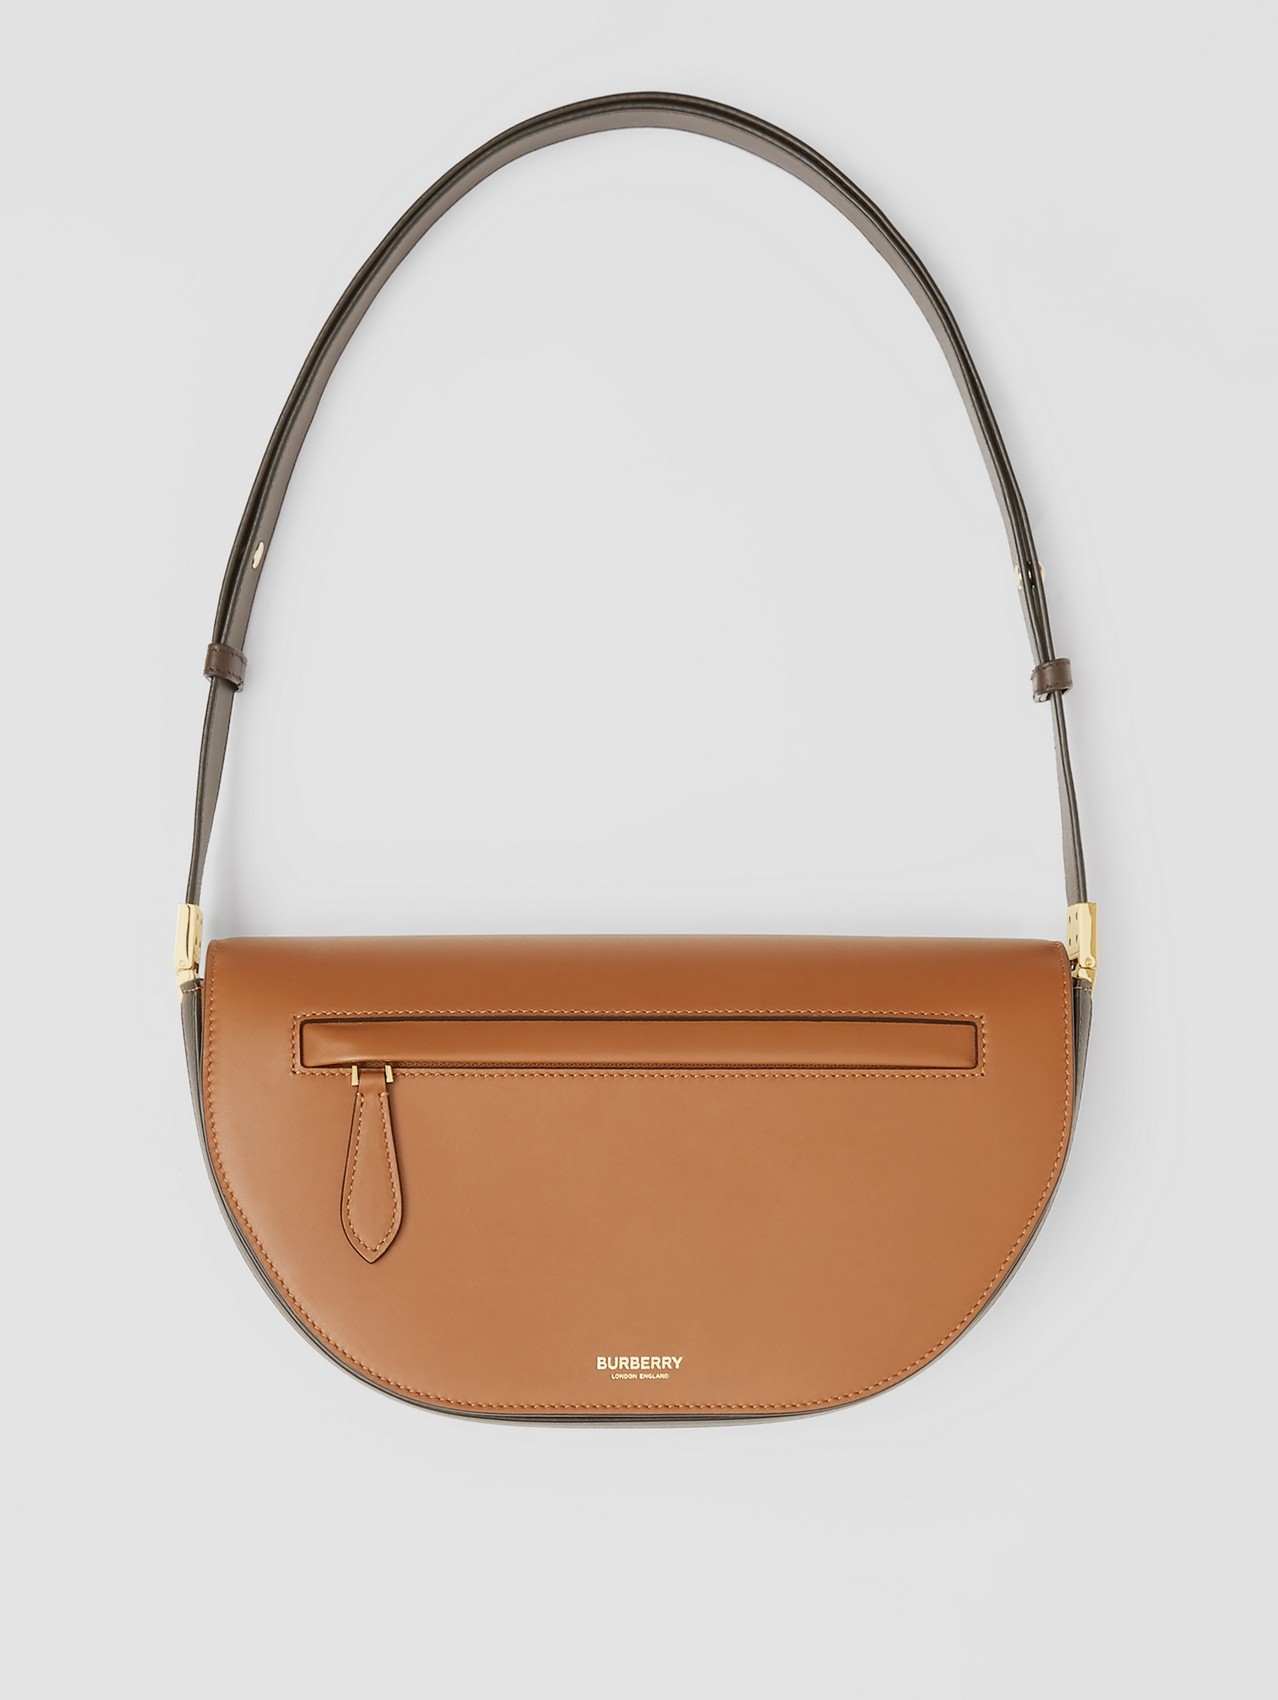 Small Two-tone Leather Olympia Bag in Warm Tan